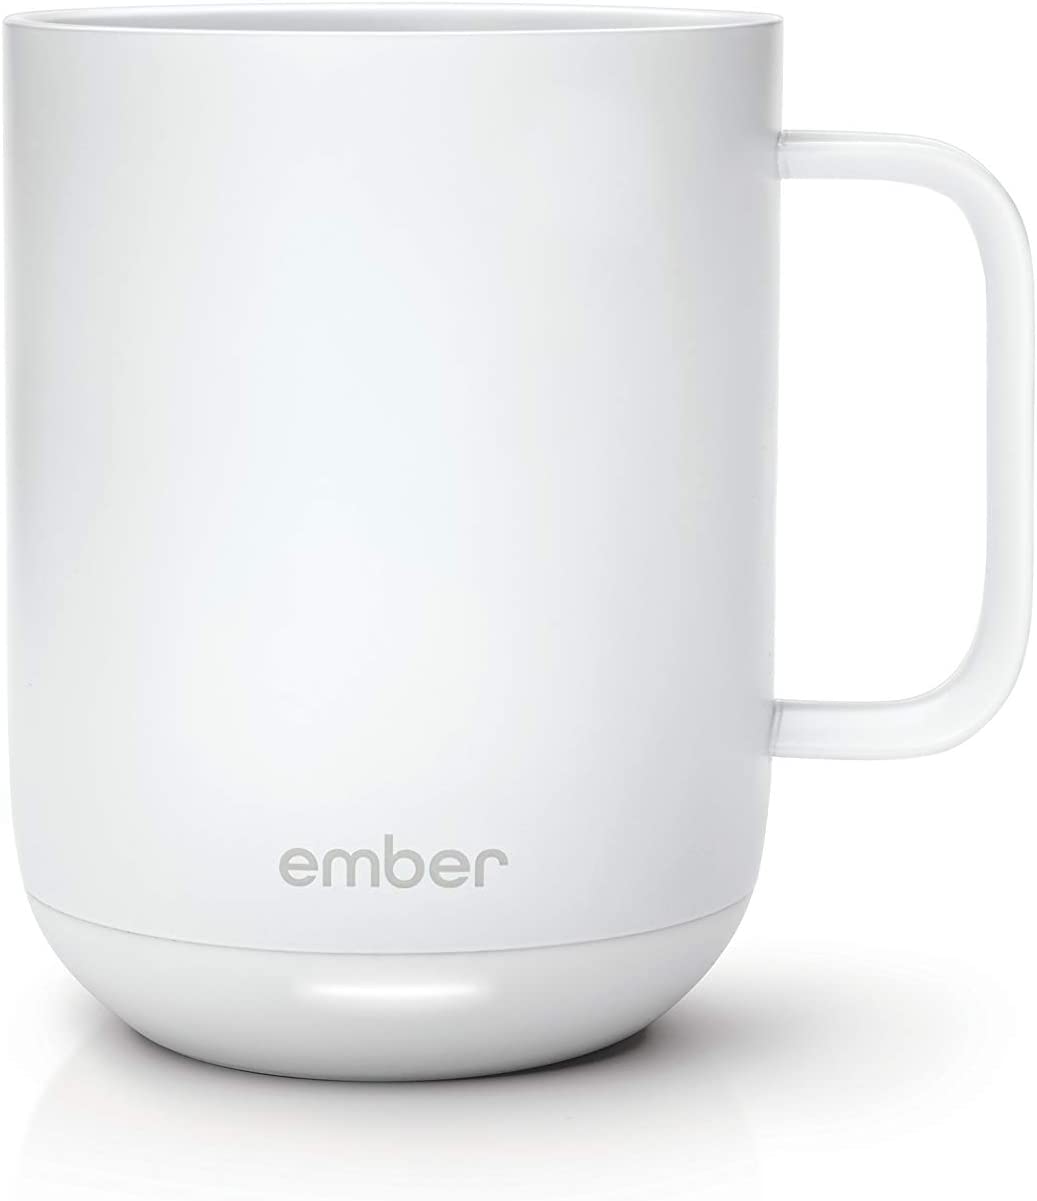 ember temperature control smart mug